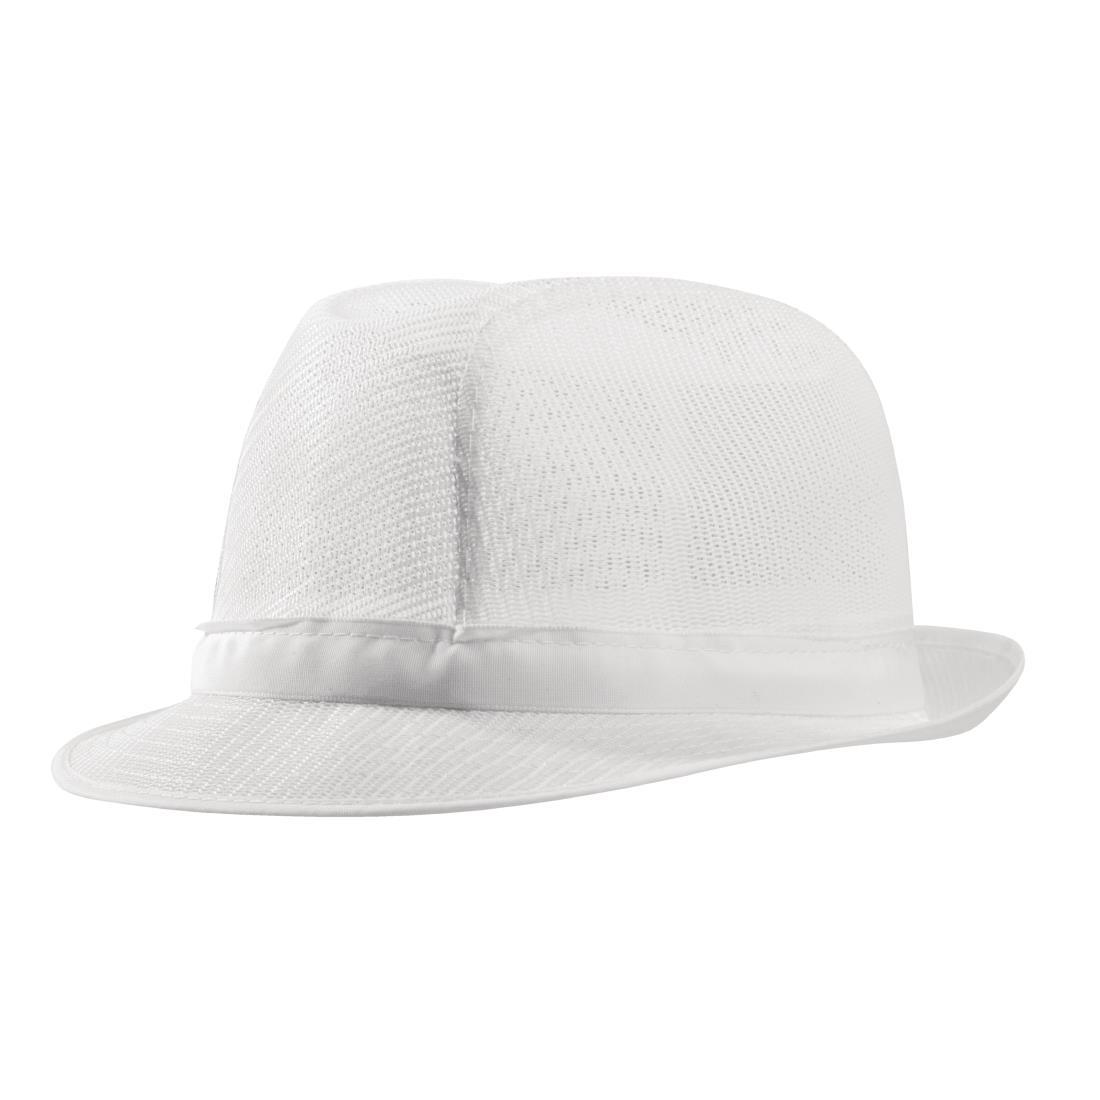 Trilby Hat White M - A214-M  - 2